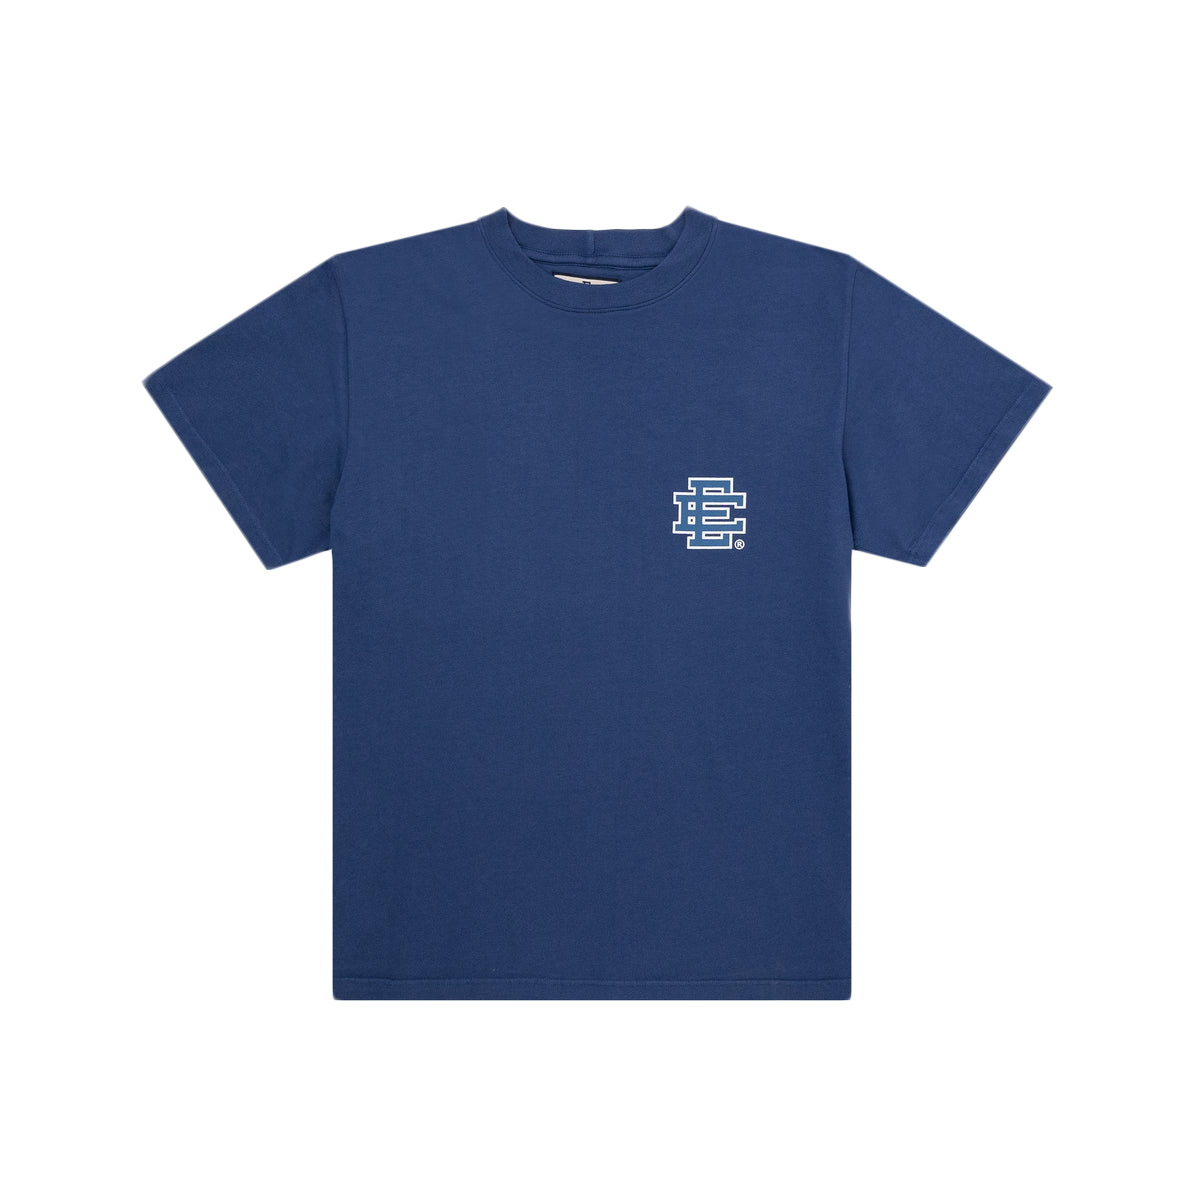 Eric Emanuel EE Basic T-shirt Slate Blue